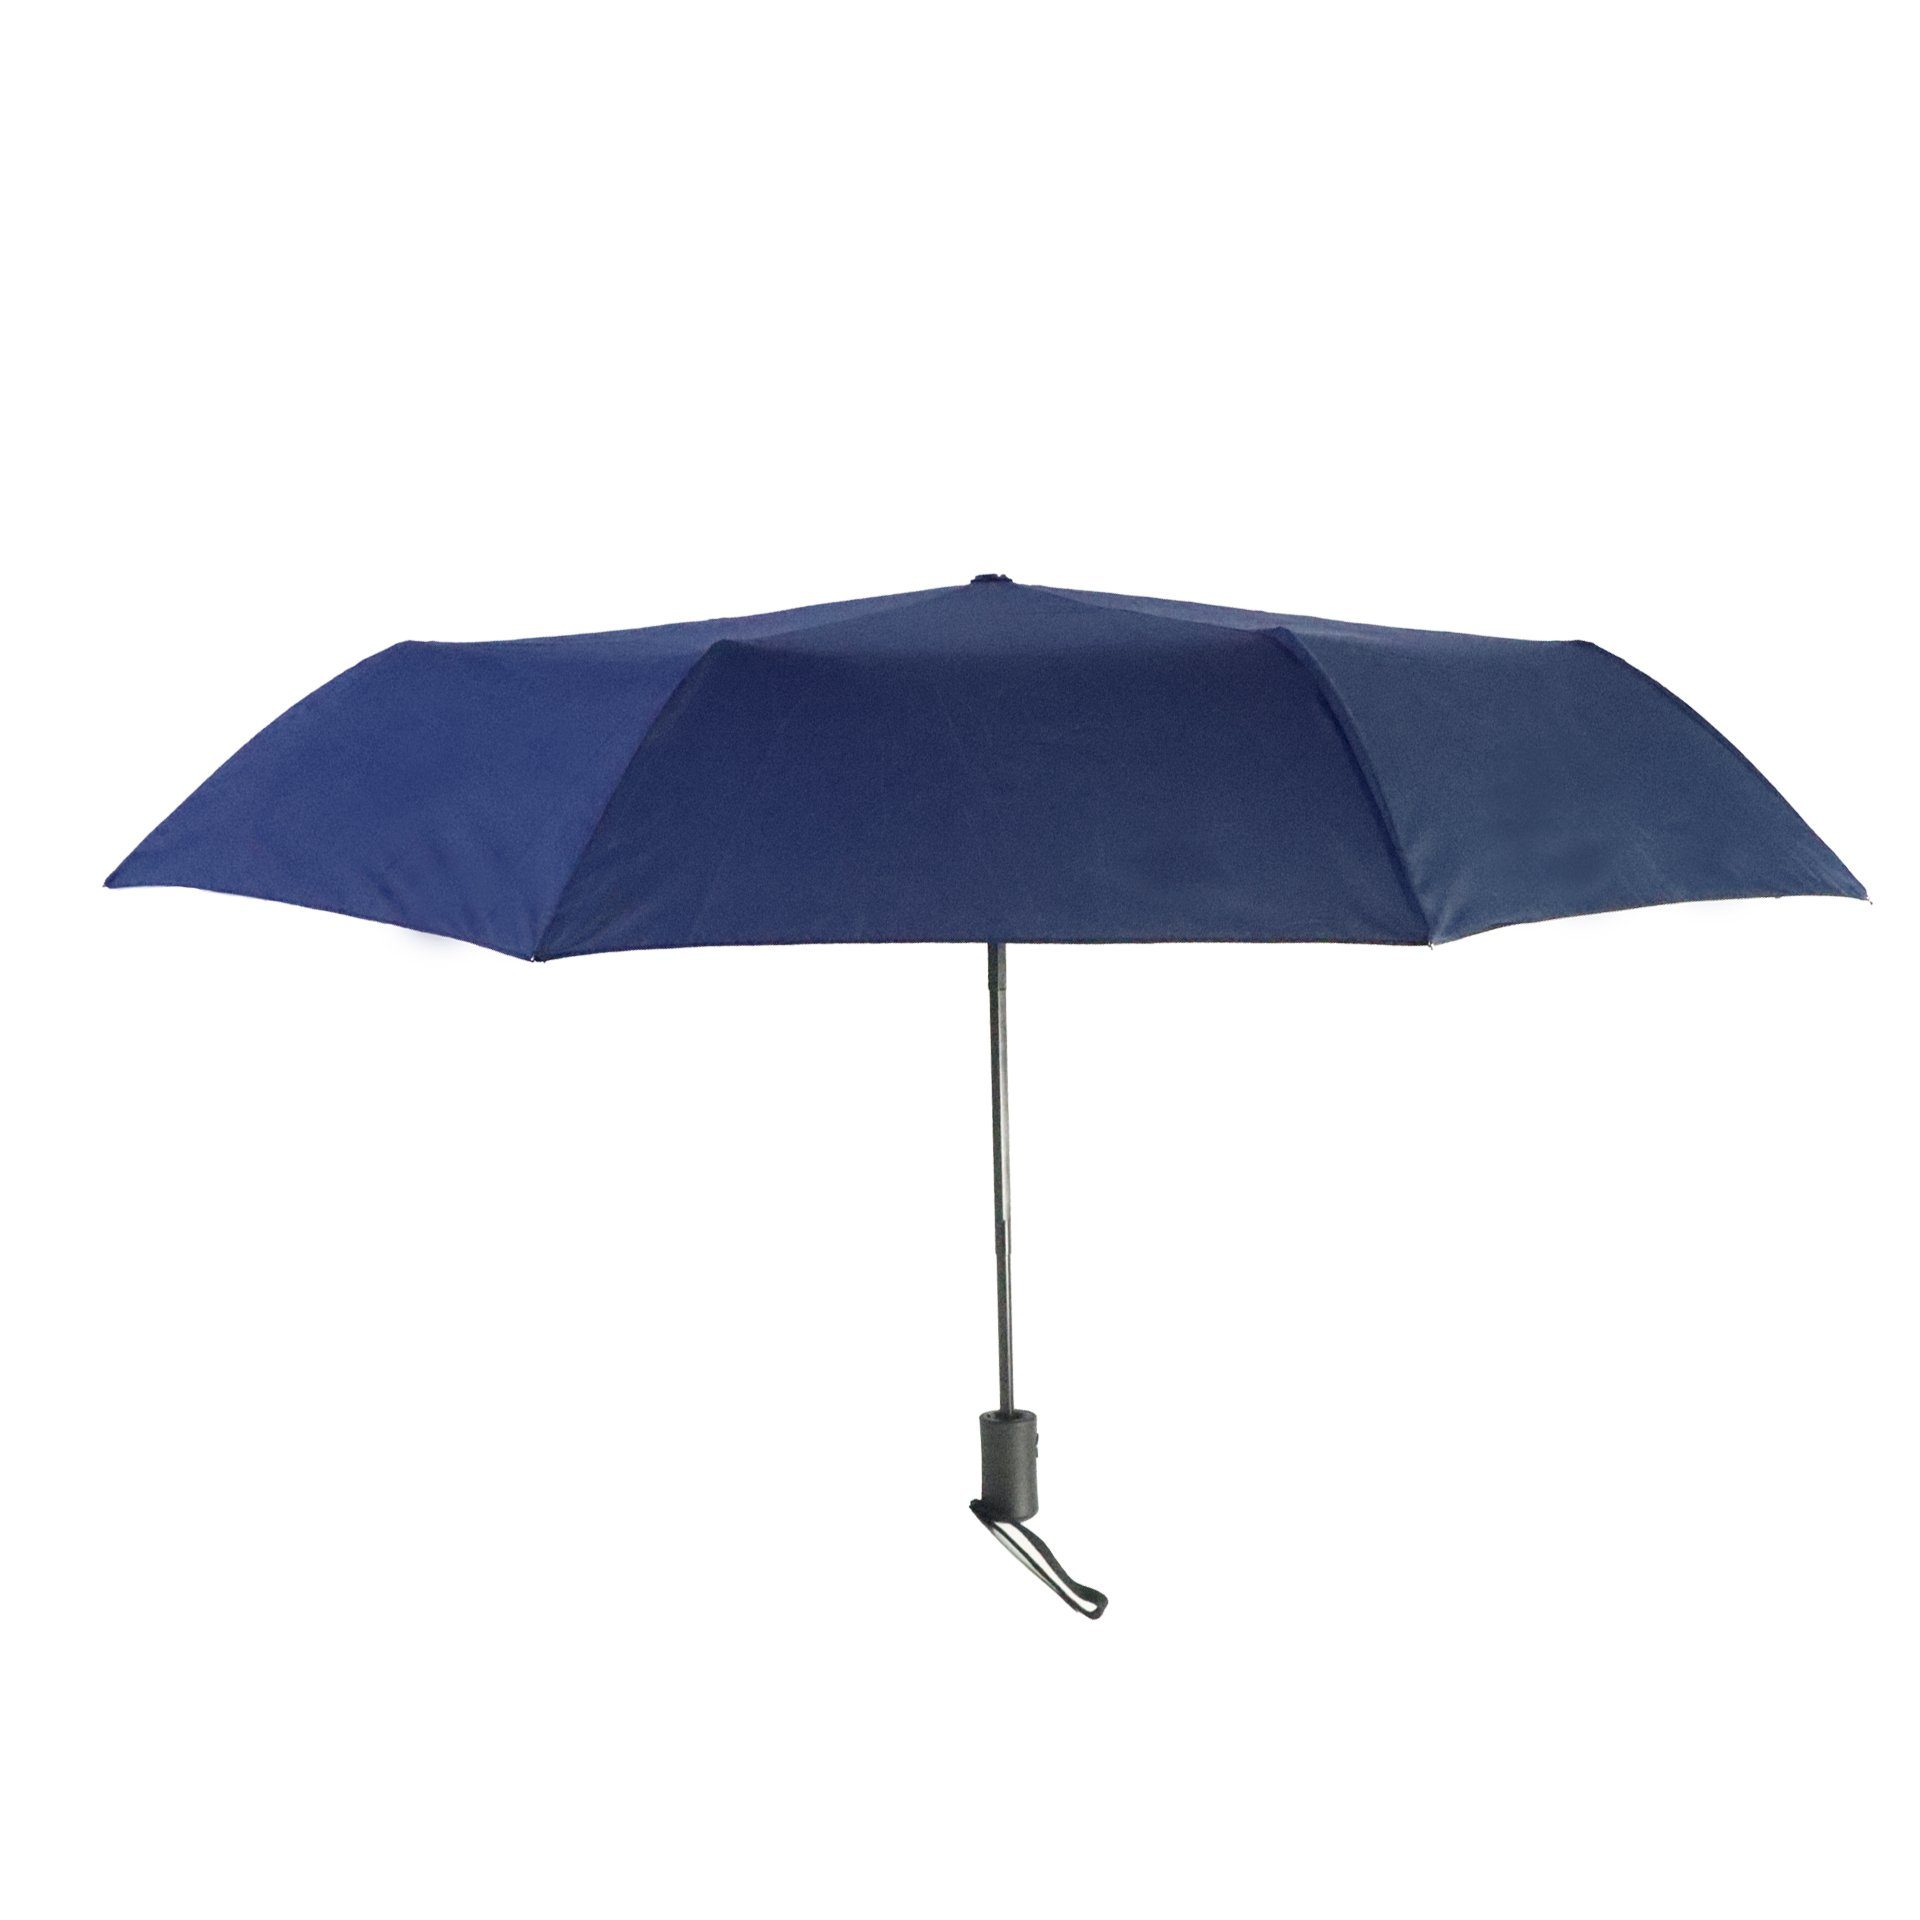 BIGGDESIGN Langregenschirm Biggdesign Moods Up Marineblauer Vollautomatik-Schirm